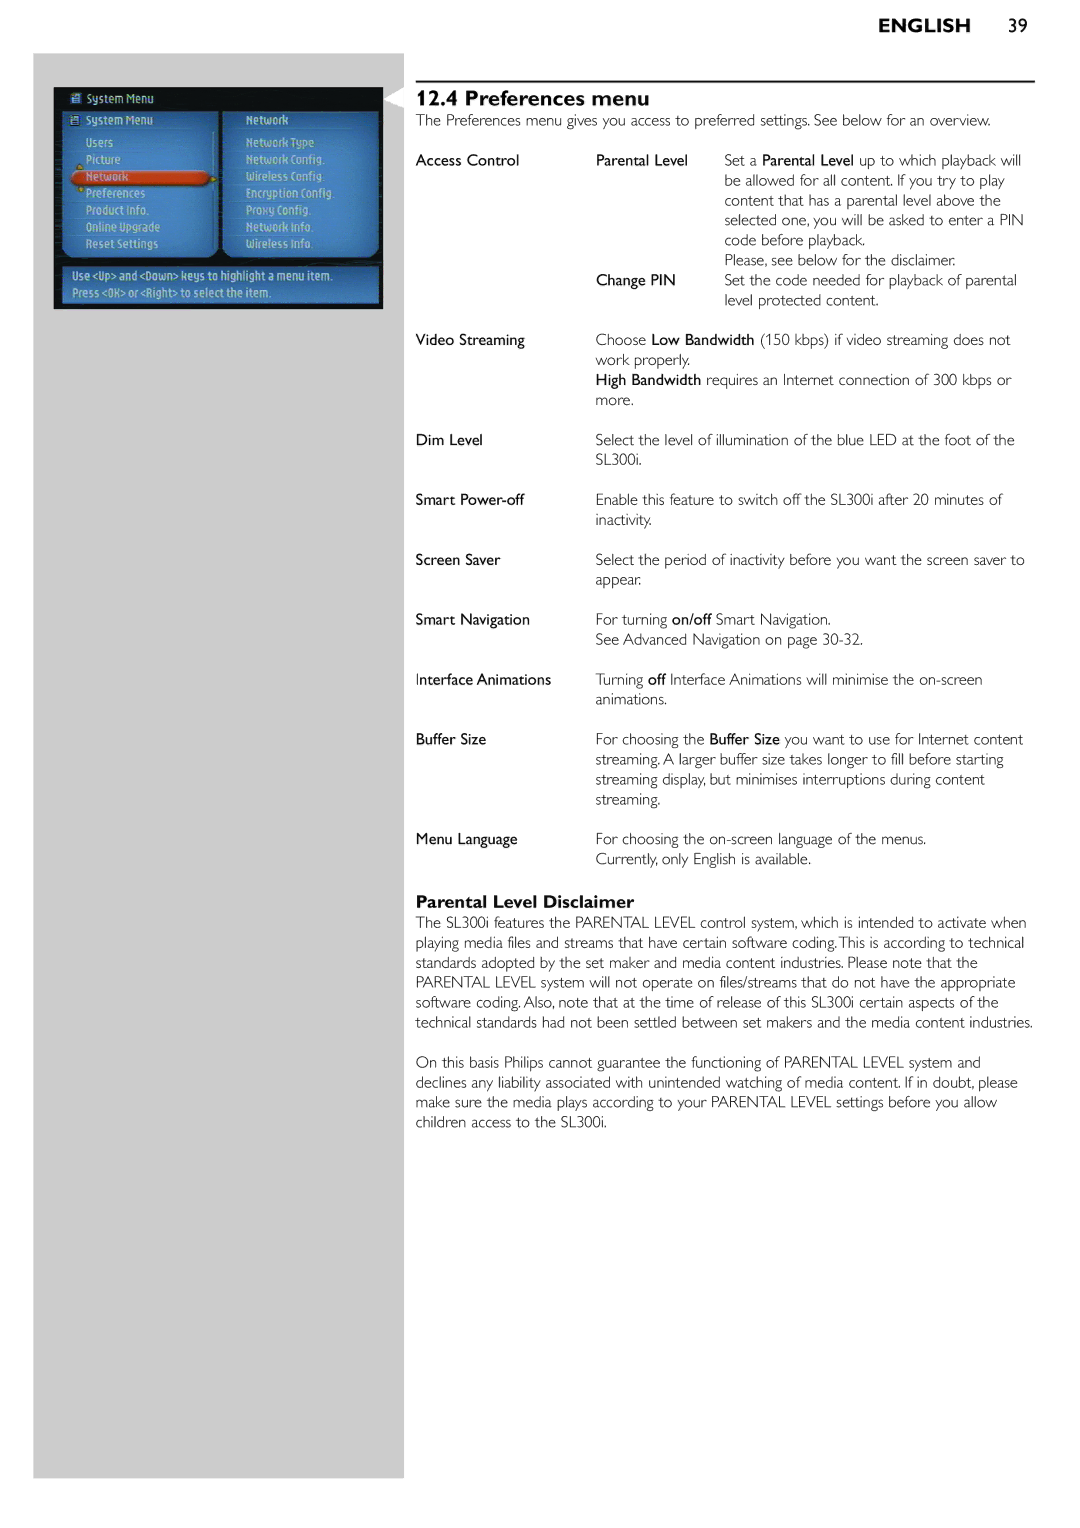 Philips SL300i manual Preferences menu, Parental Level Disclaimer 